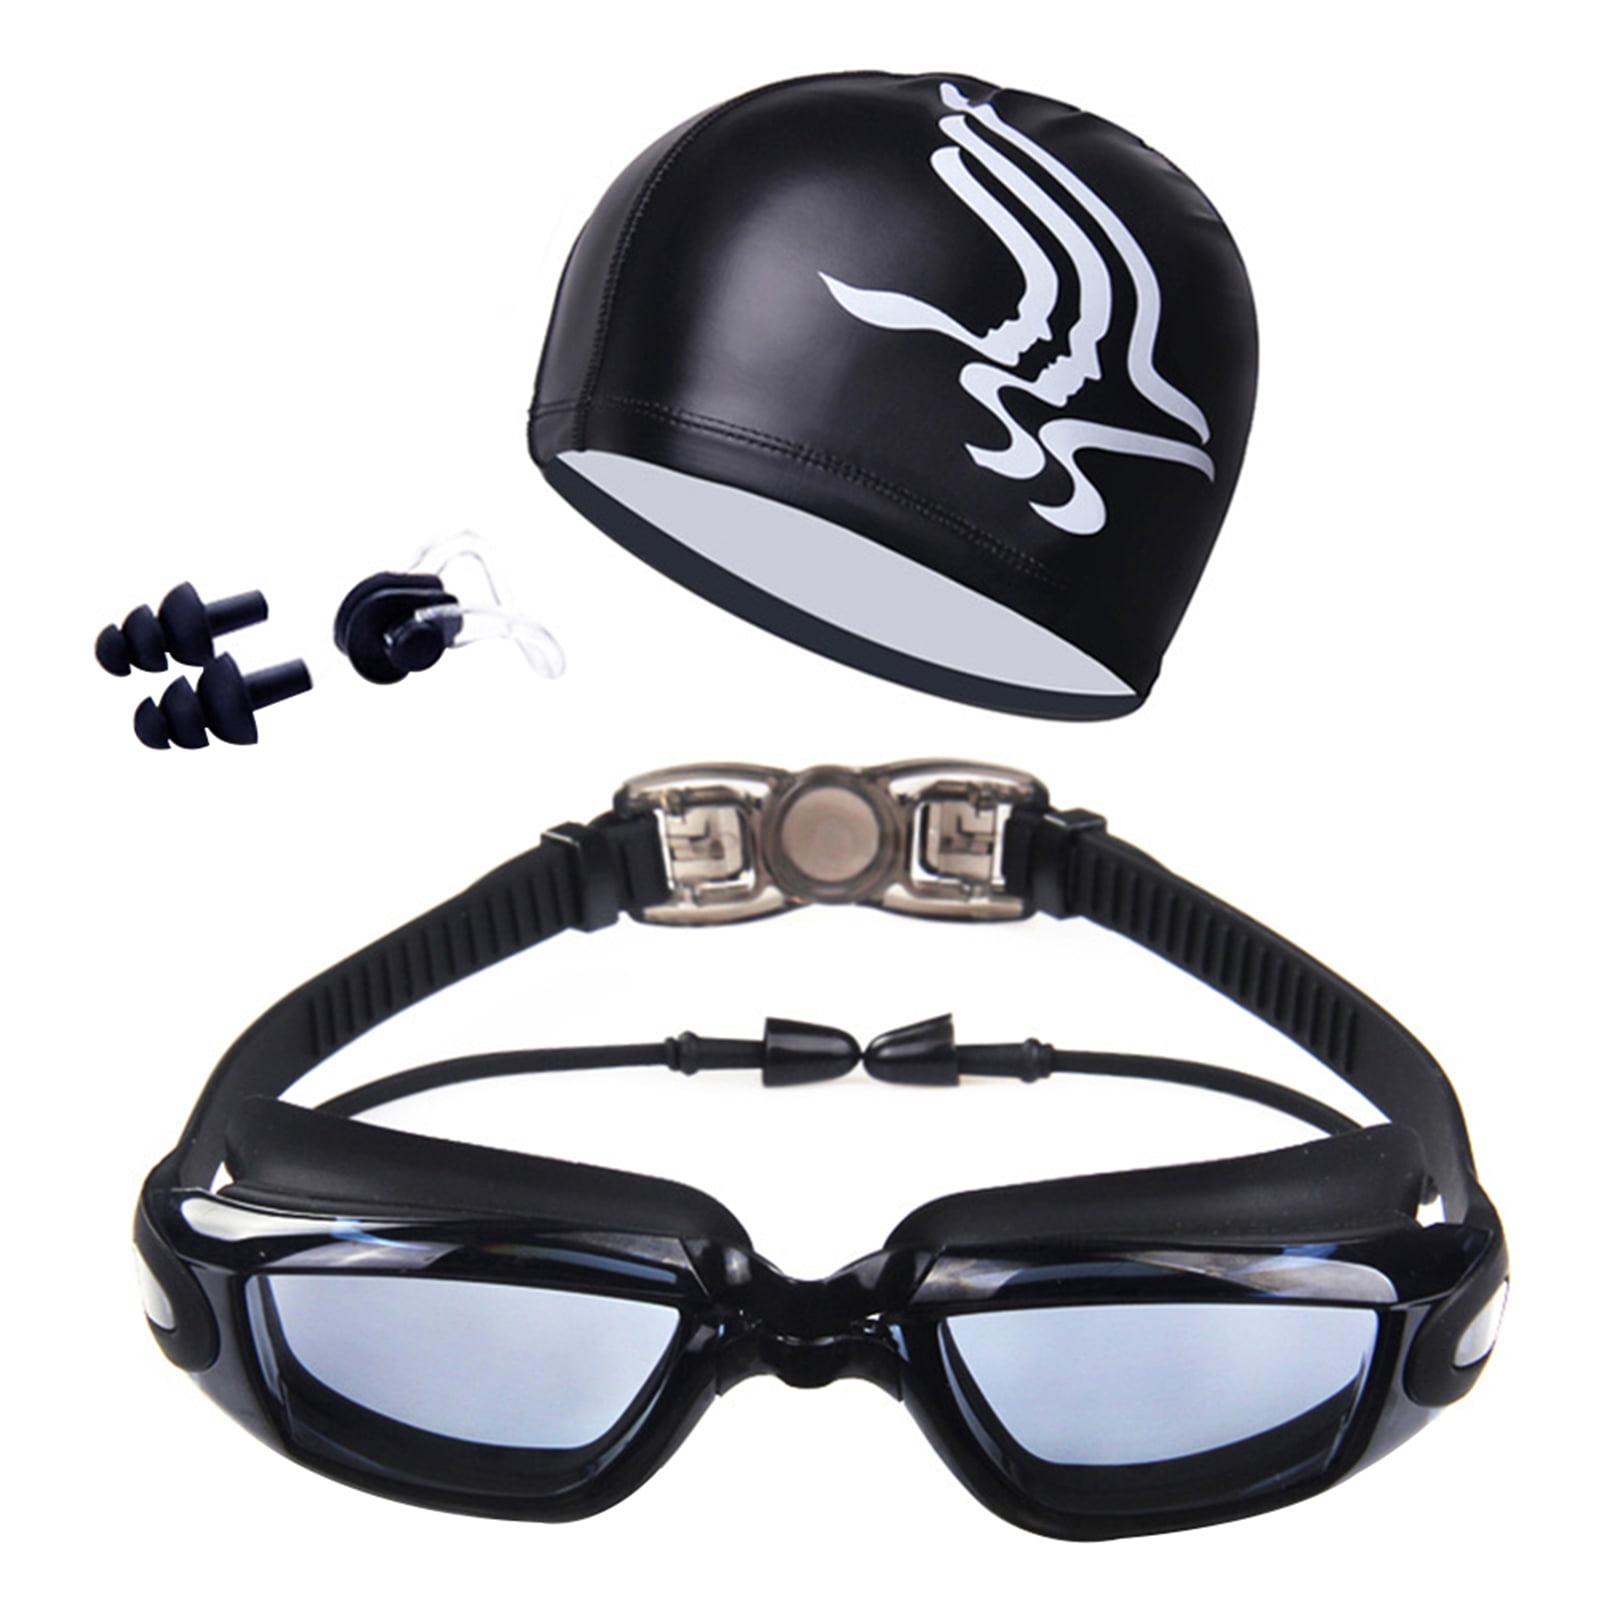 Adult Summer Diving Swimming Glasses Goggles Set Earplugs Nose Clip HoODUSDOFS 